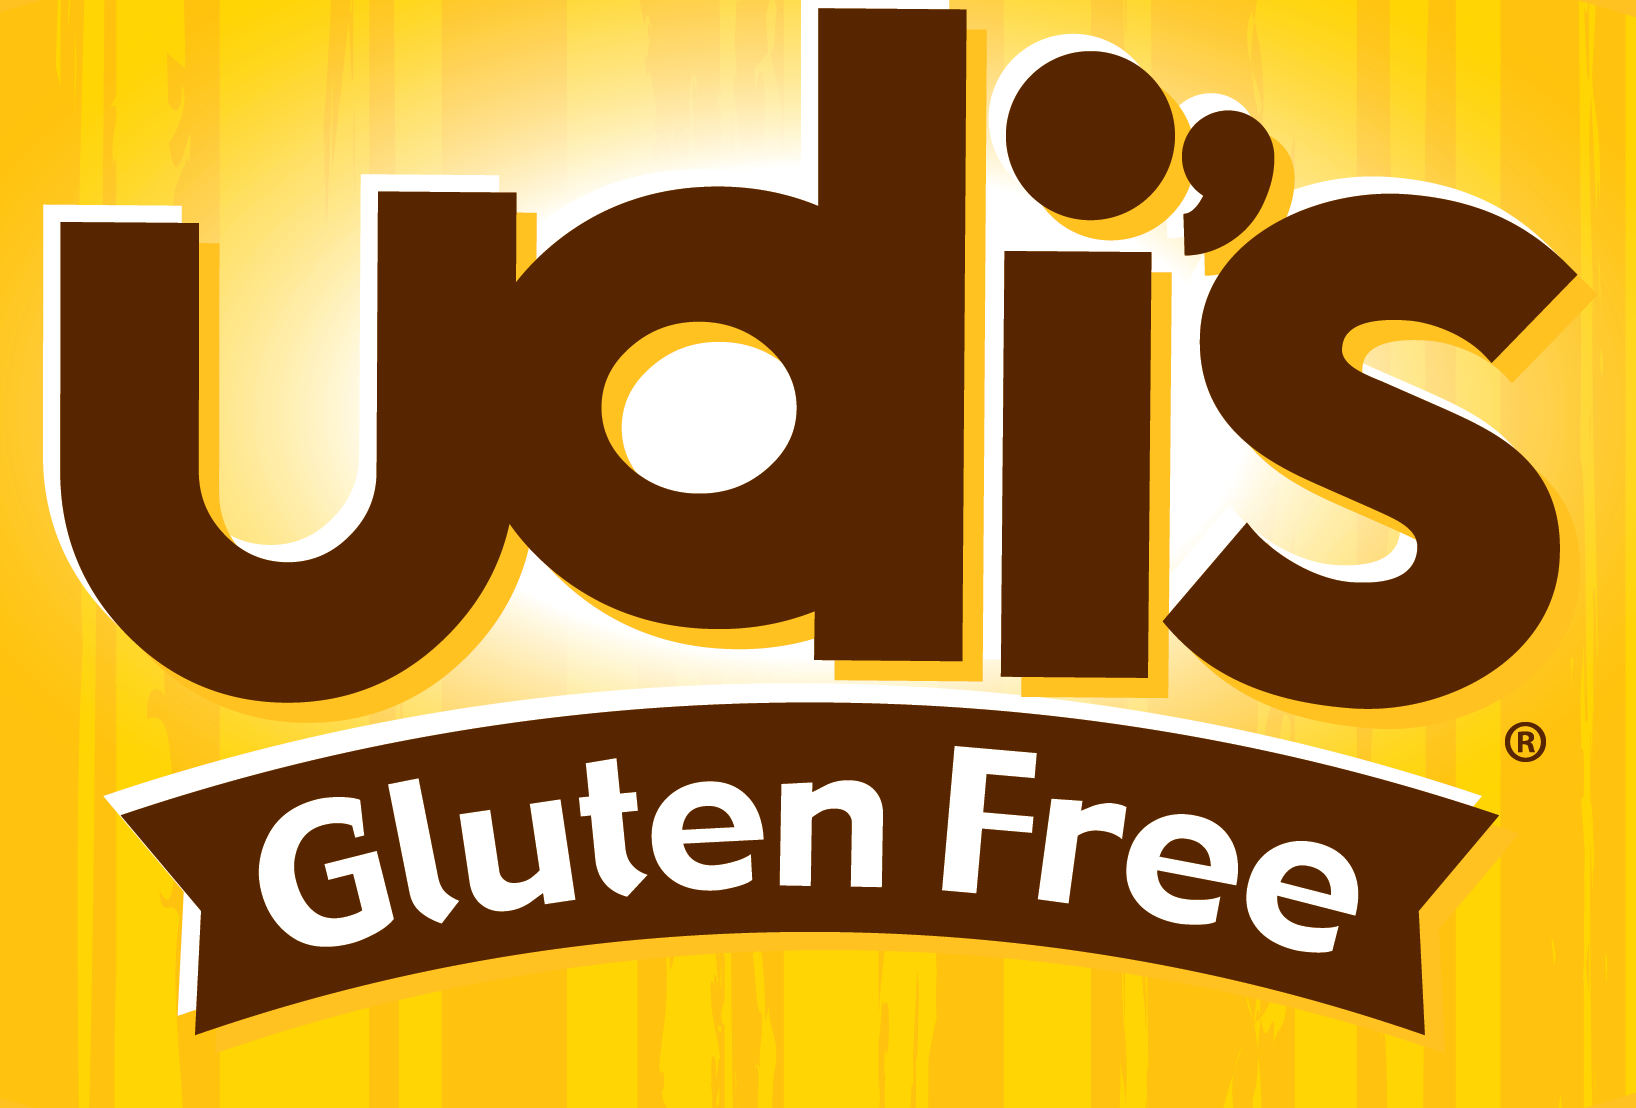 udi's Gluten Free